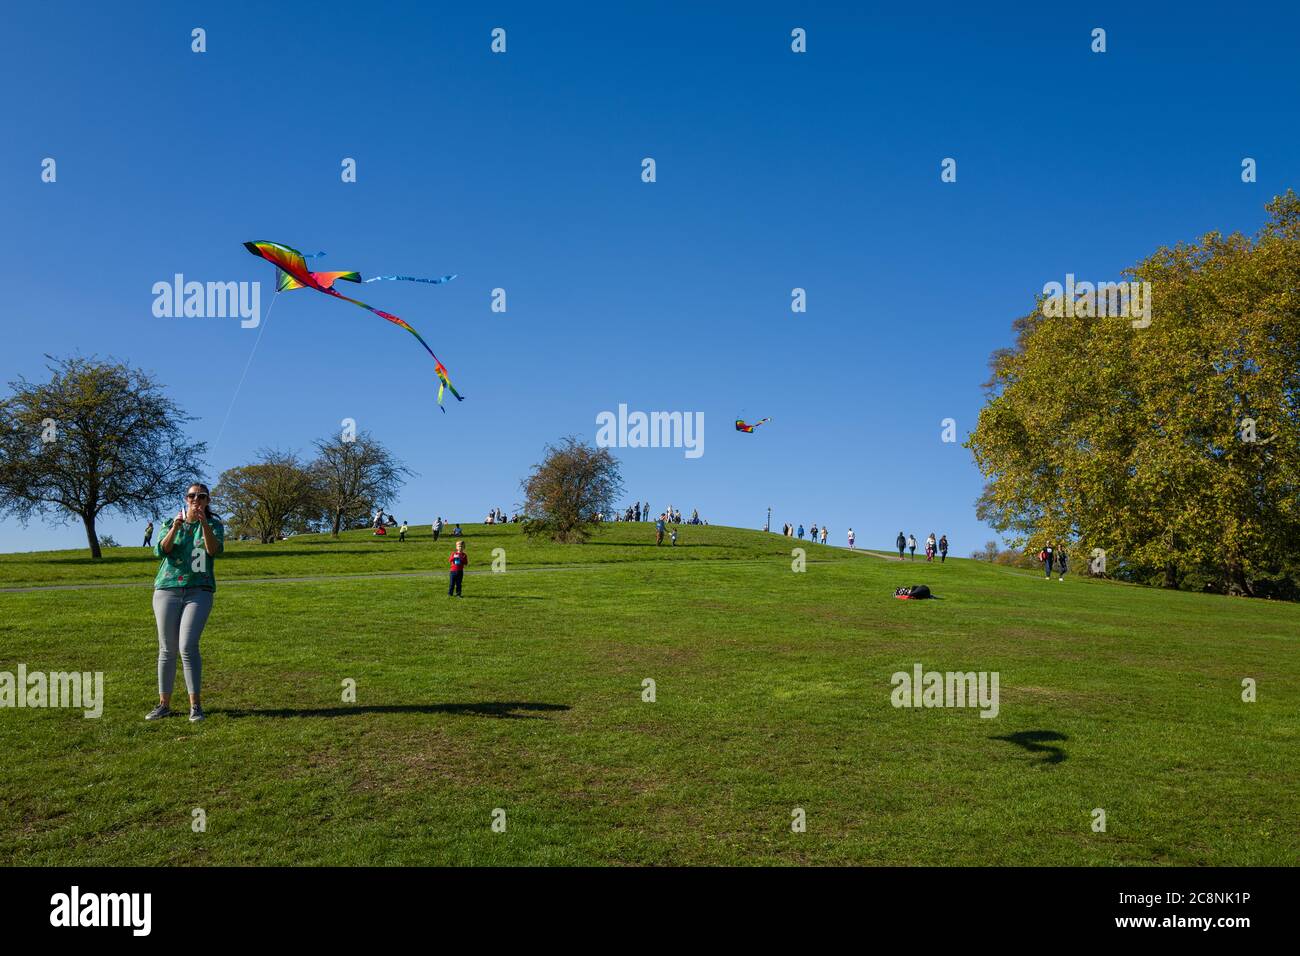 Kites flown on a beautiful sunny autumn day on Primrose Hill, London, UK. Horizontal format. Stock Photo